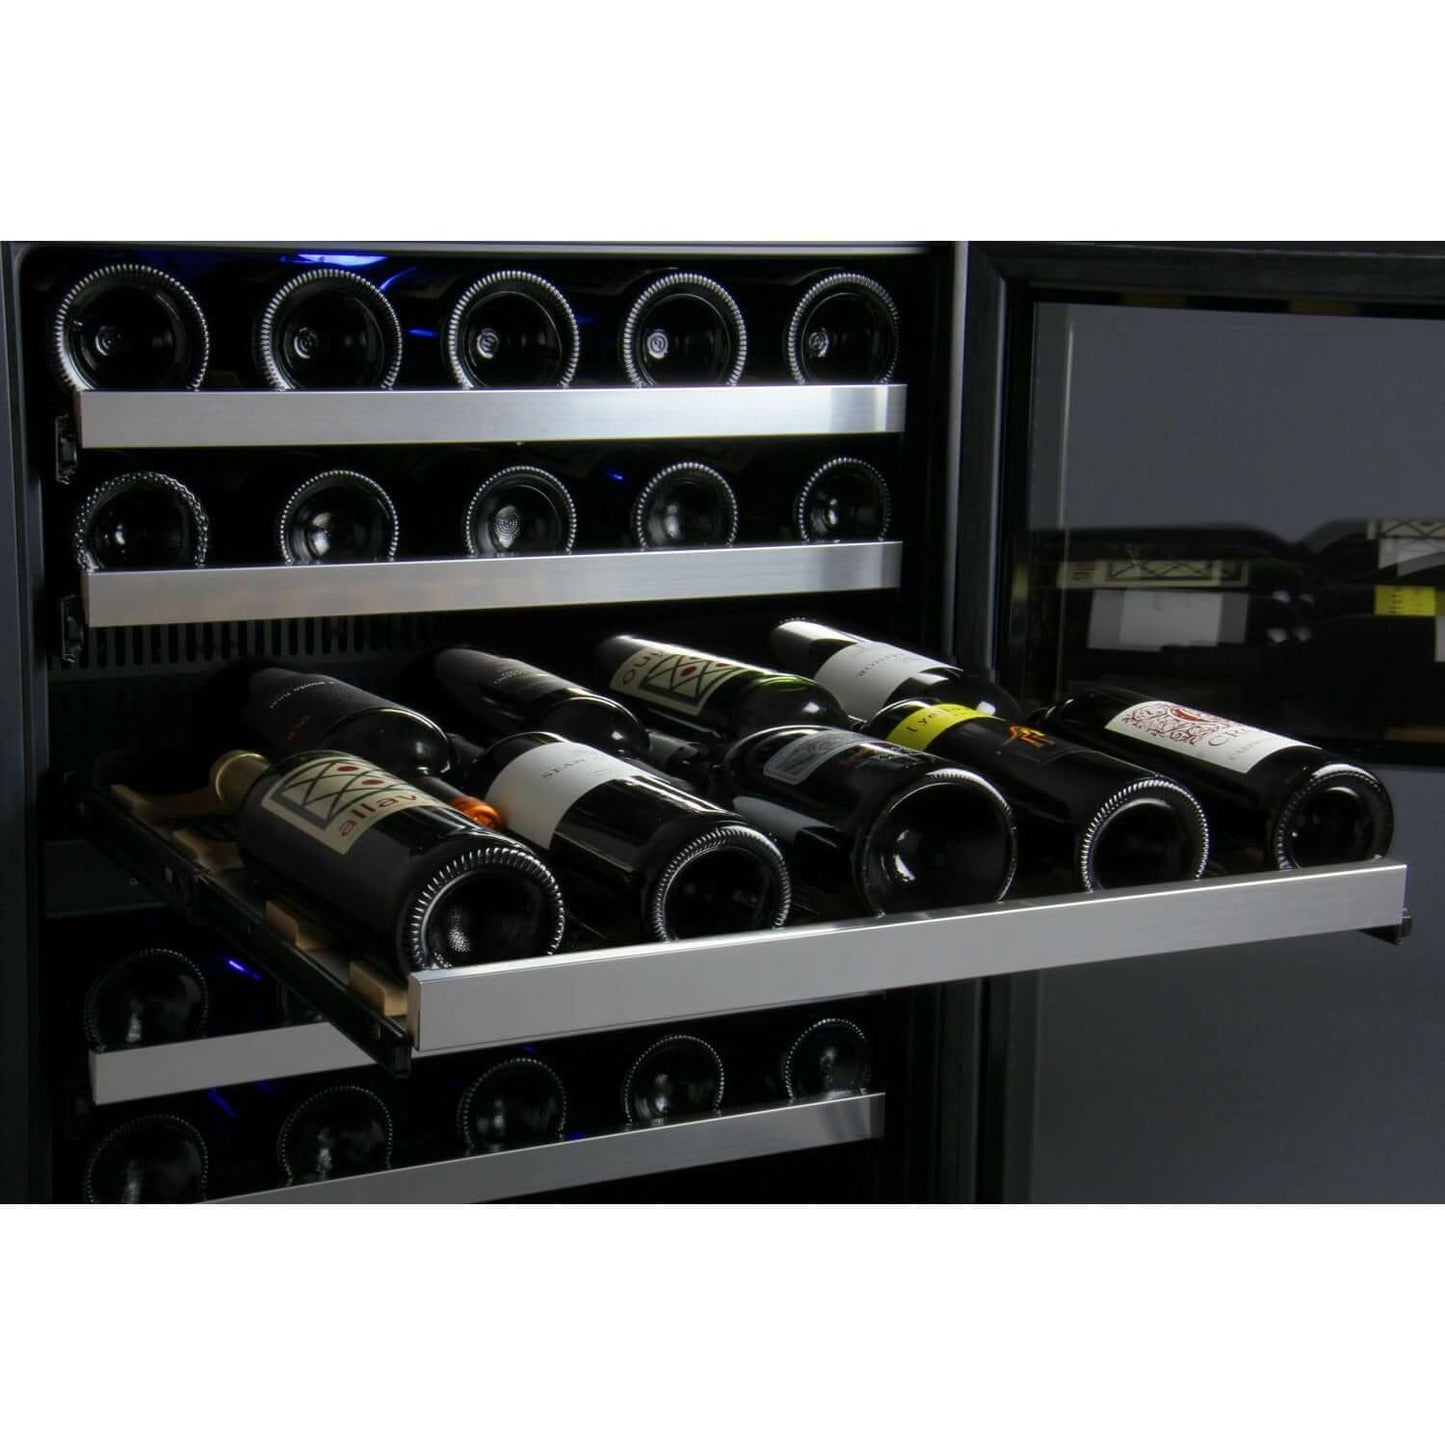 Allavino 24” 56 Bottle Single Zone Wine Cooler | Tru-Vino Technology and FlexCount II Shelving